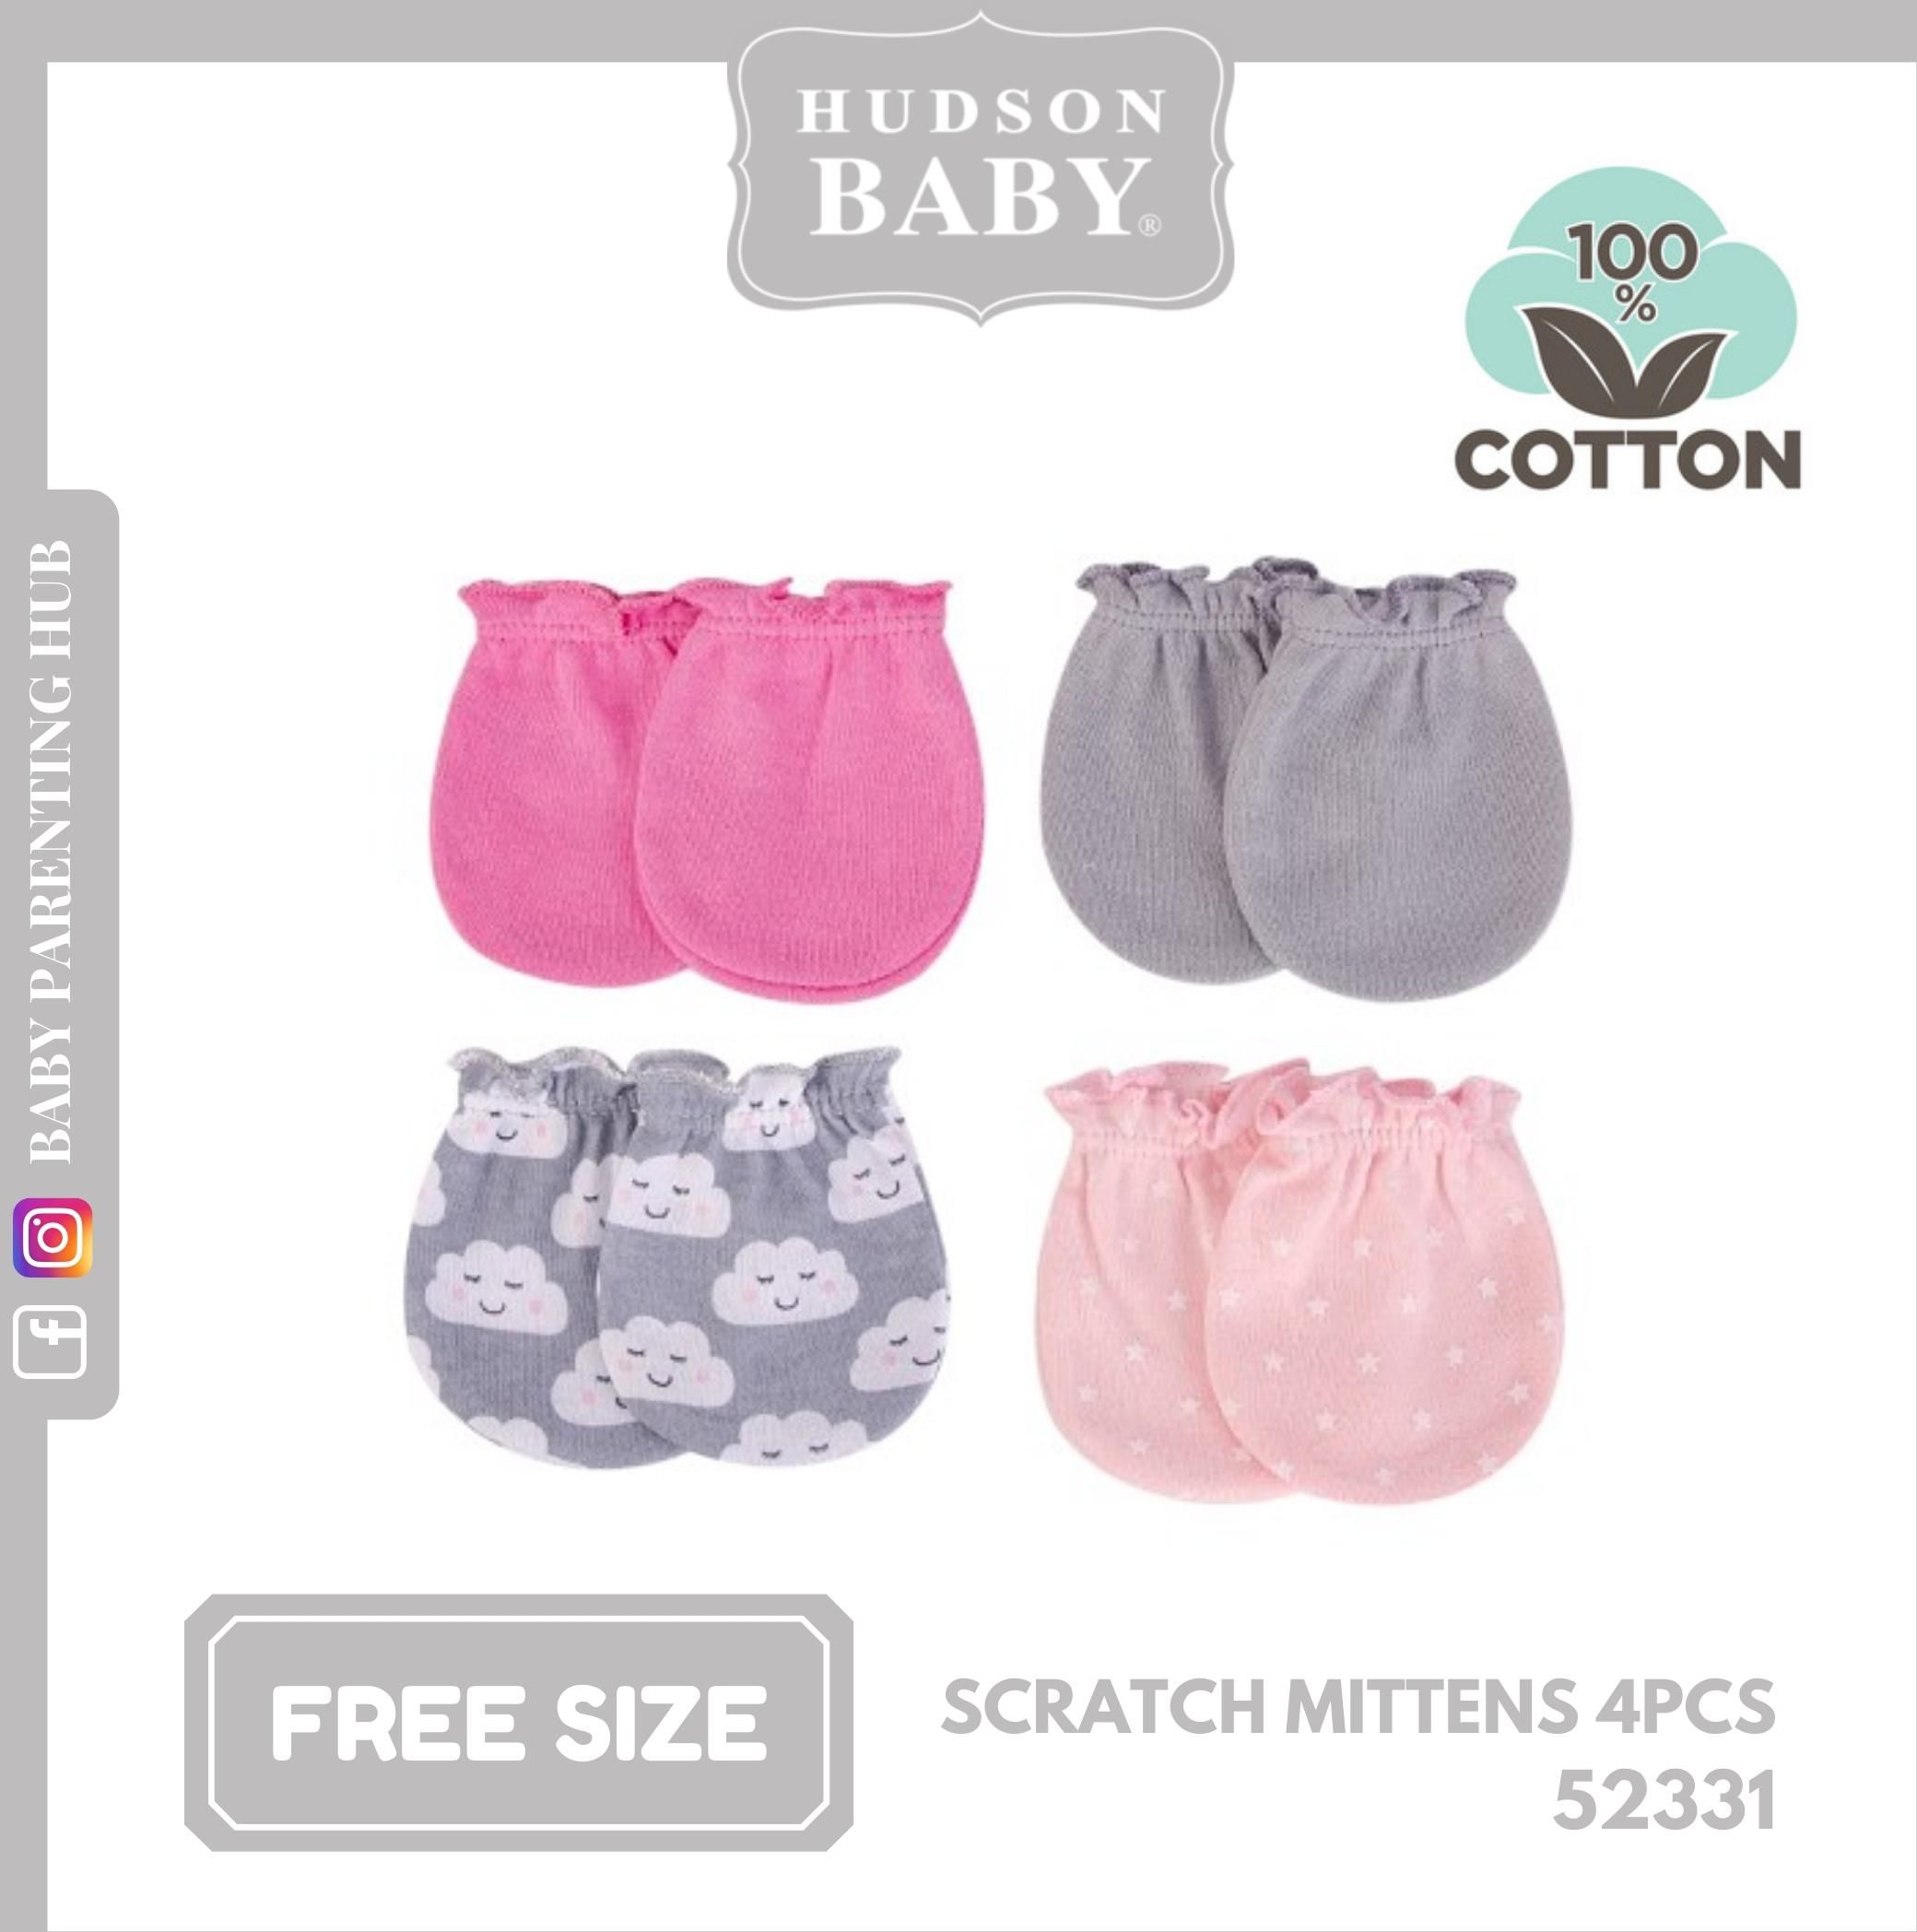 Hudson Baby Girl Scratch Mittens Set 4pcs 52331